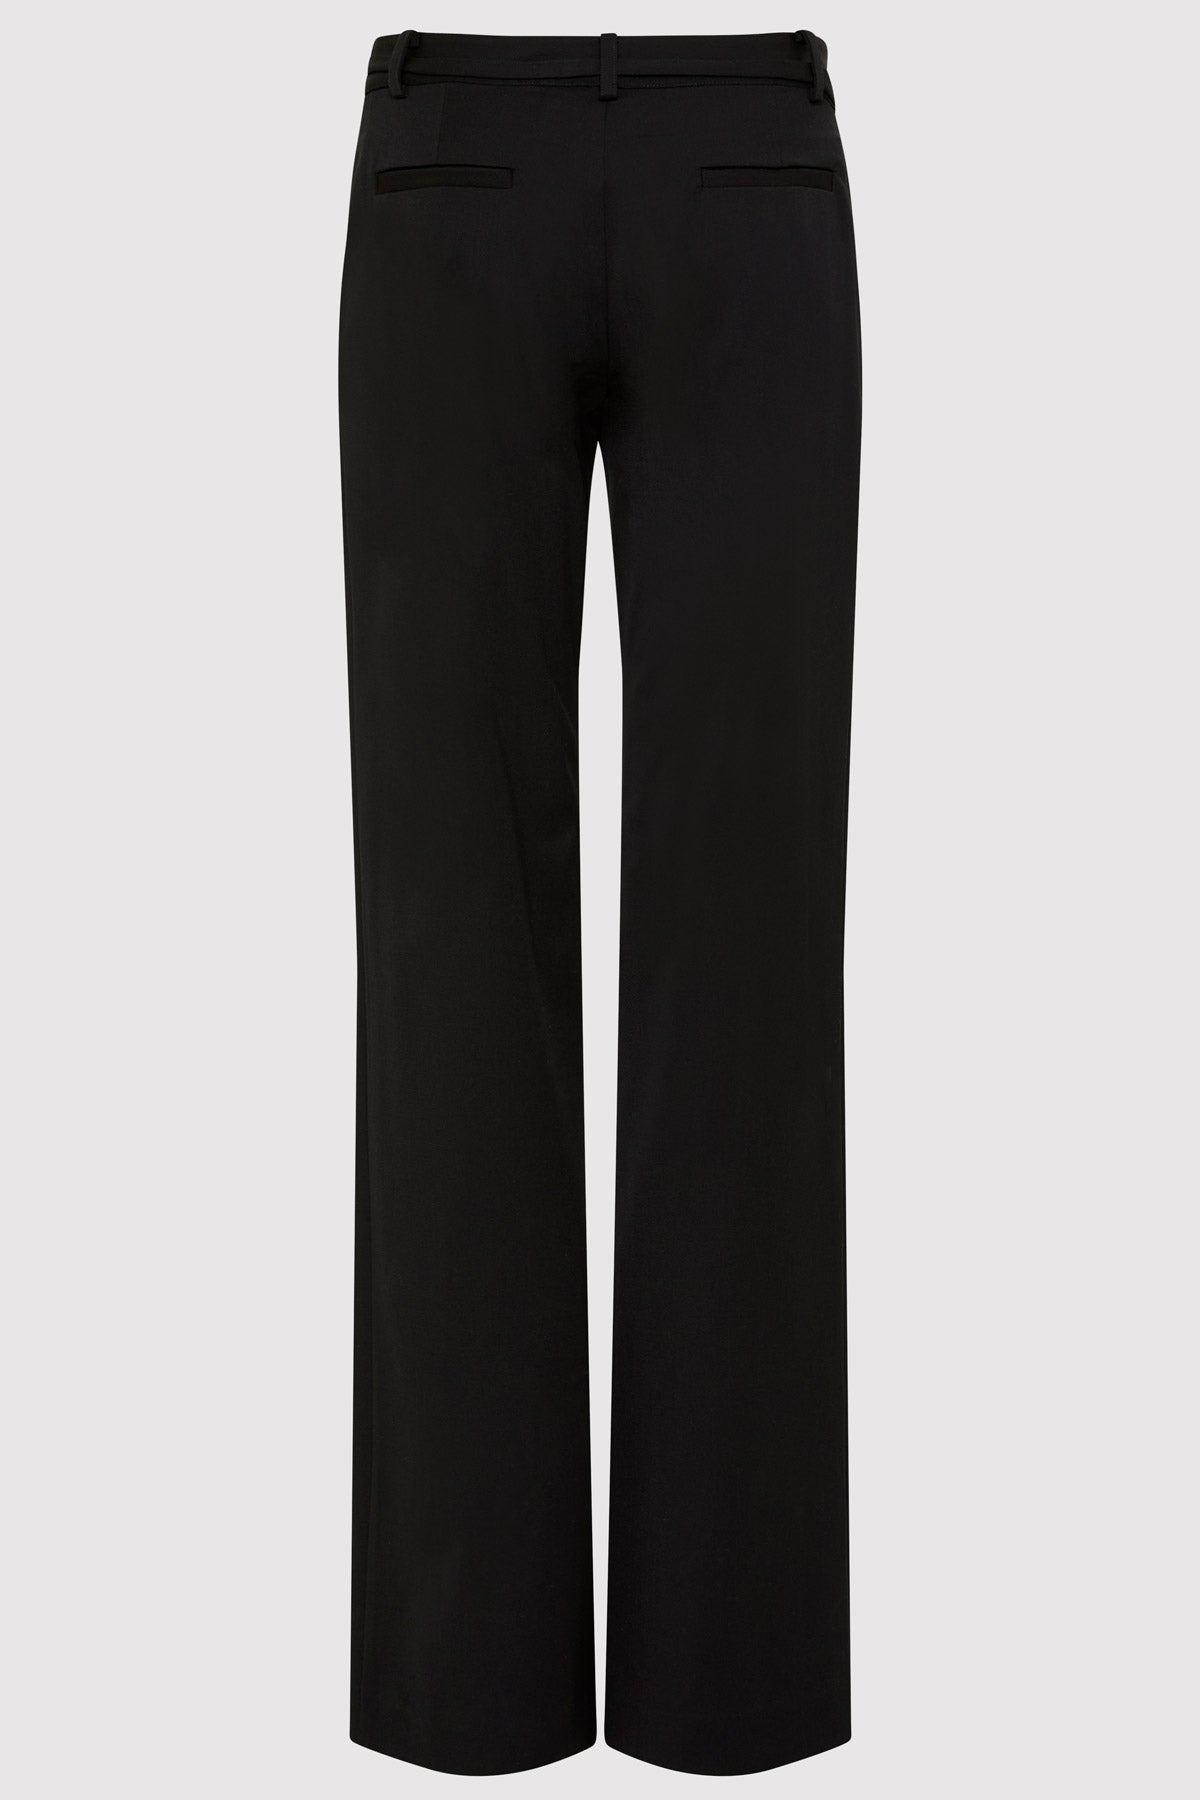 90s Panelled Pants - Black